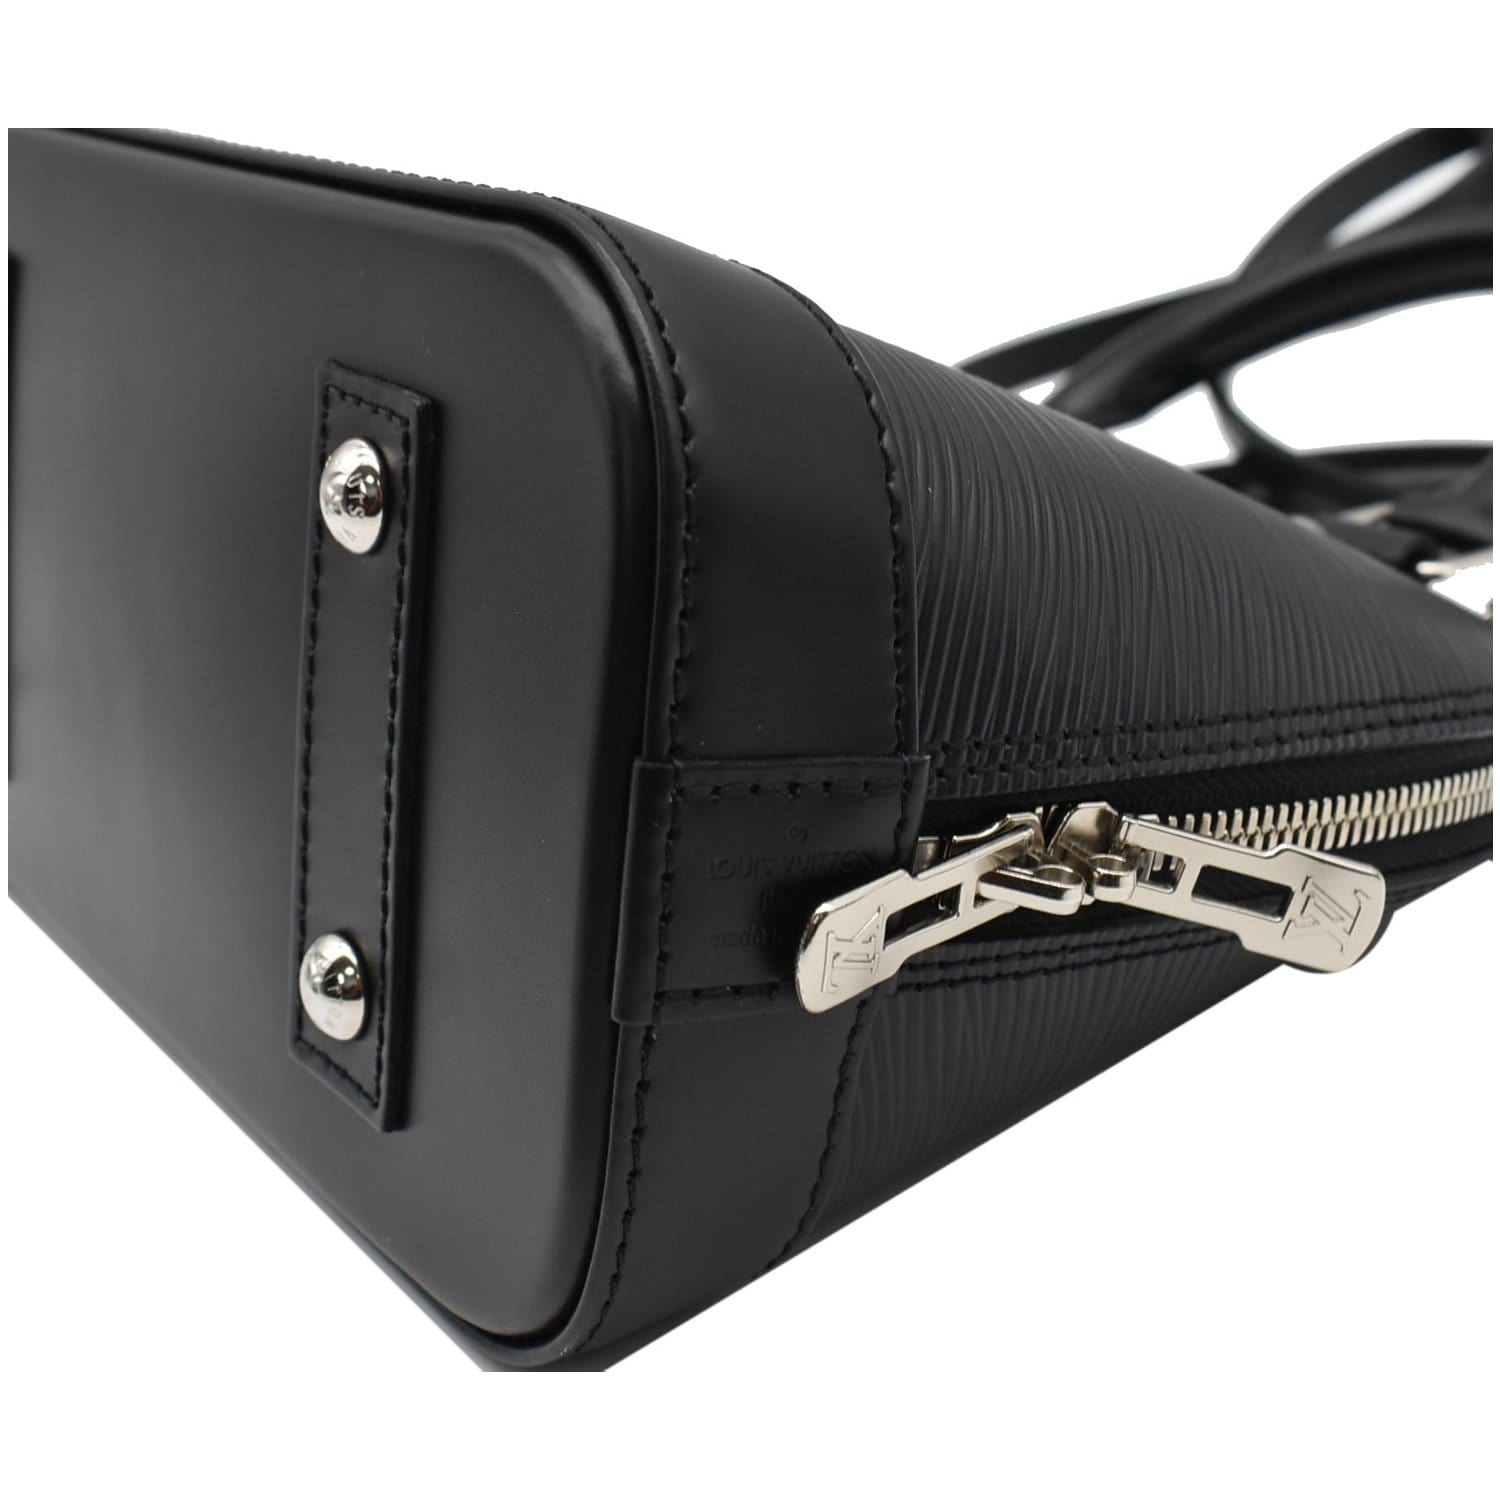 Alma bb leather handbag Louis Vuitton Black in Leather - 24984144